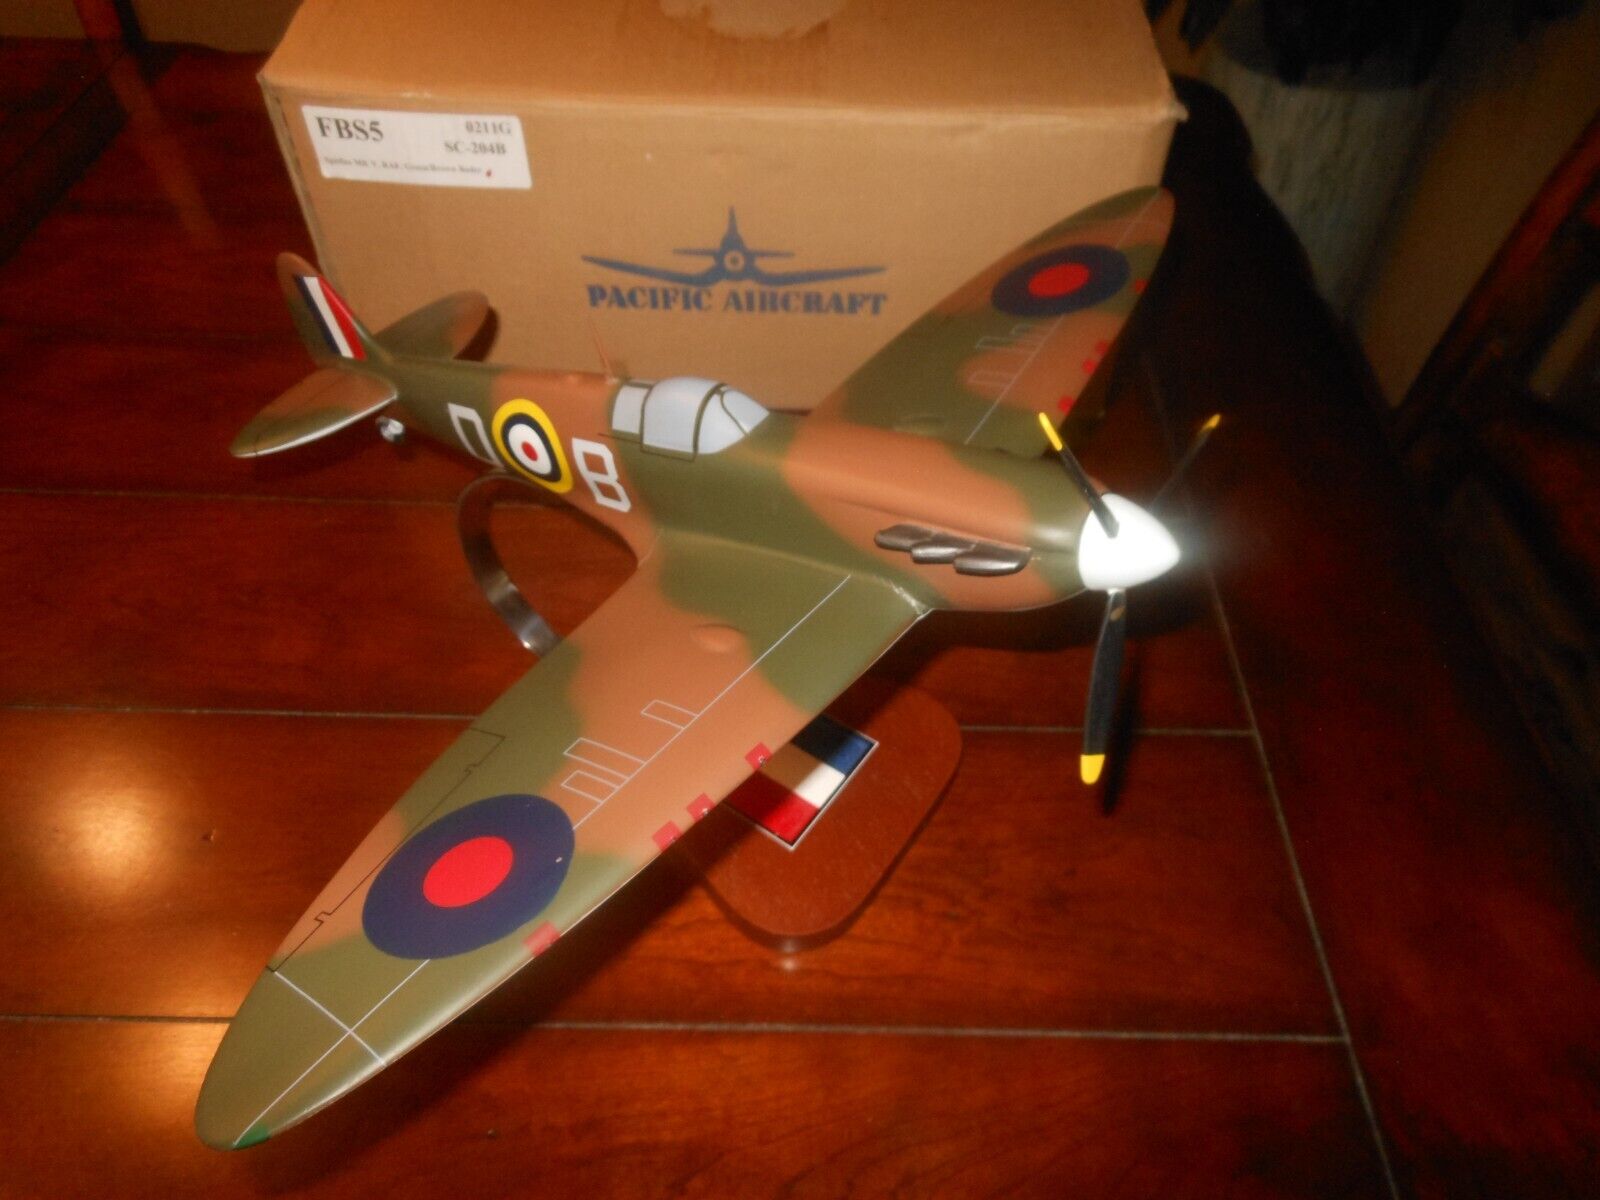 Pacific Aircraft Spitfire MK V RAF Airplane Model & Stand/Box Green/Brown Bader